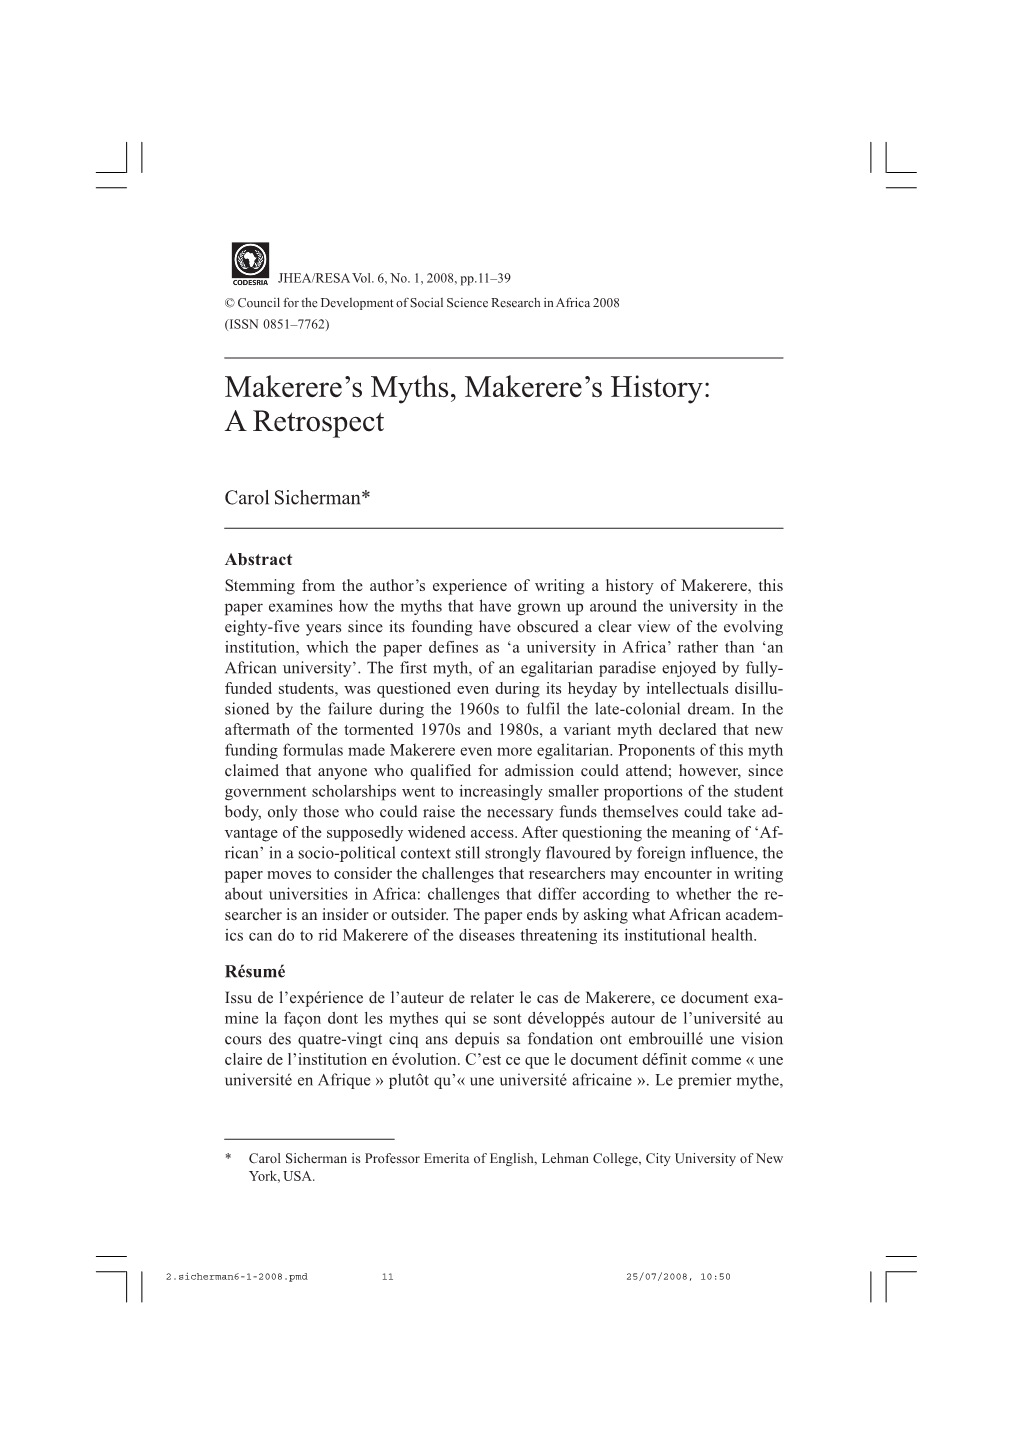 Makerere's Myths, Makerere's History: a Retrospect